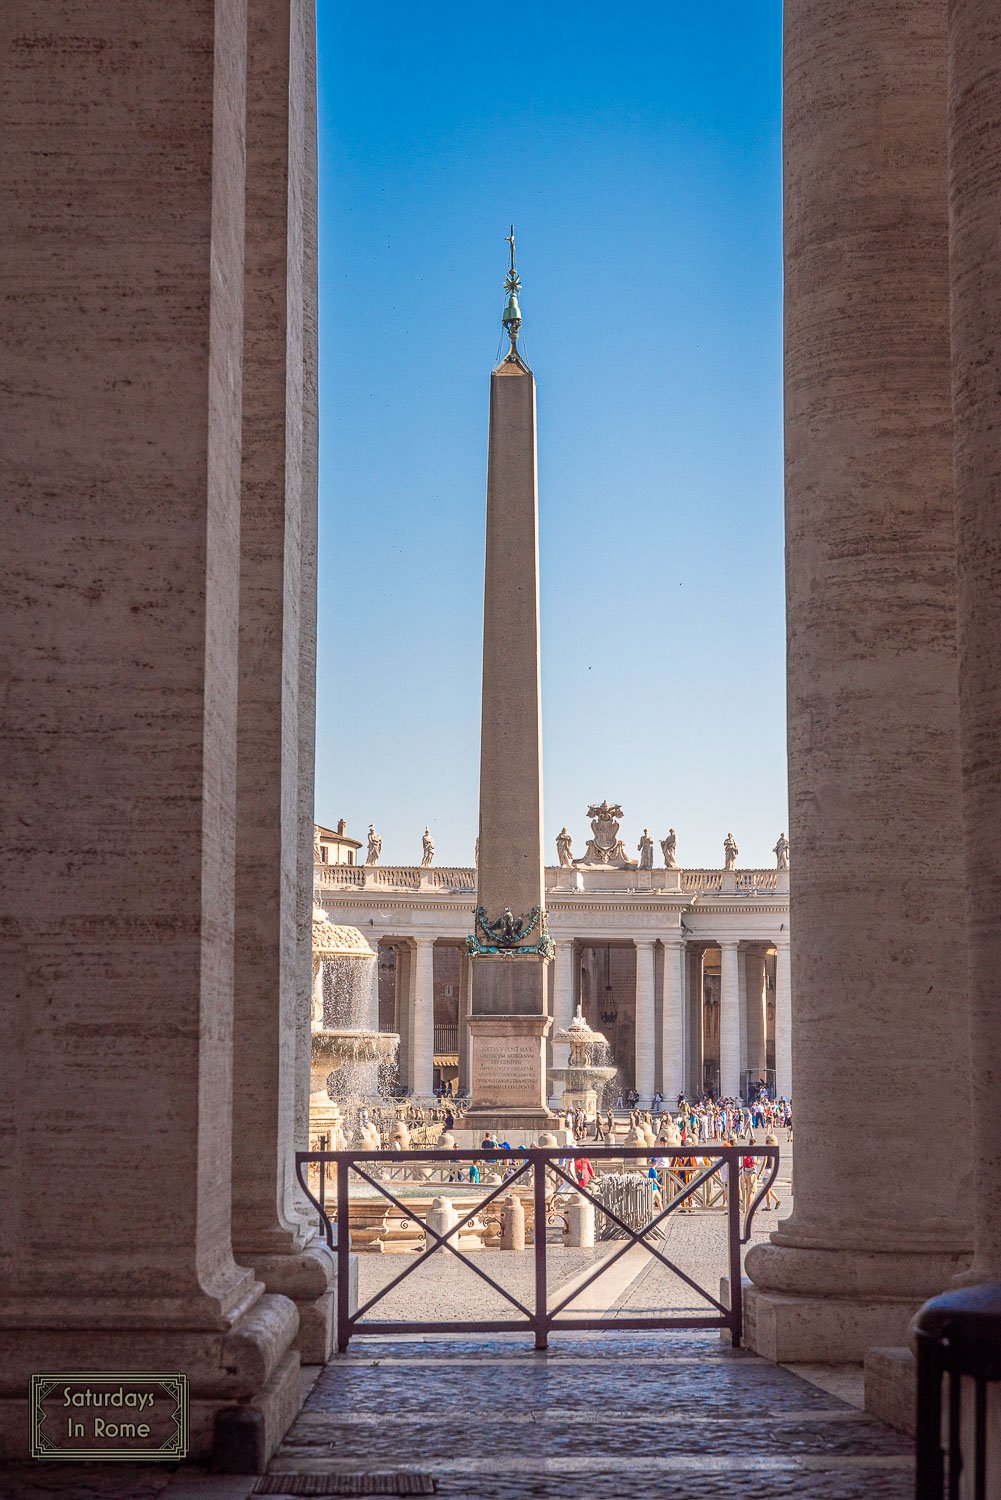 egyptian obelisks in rome - The Vatican Obelisk